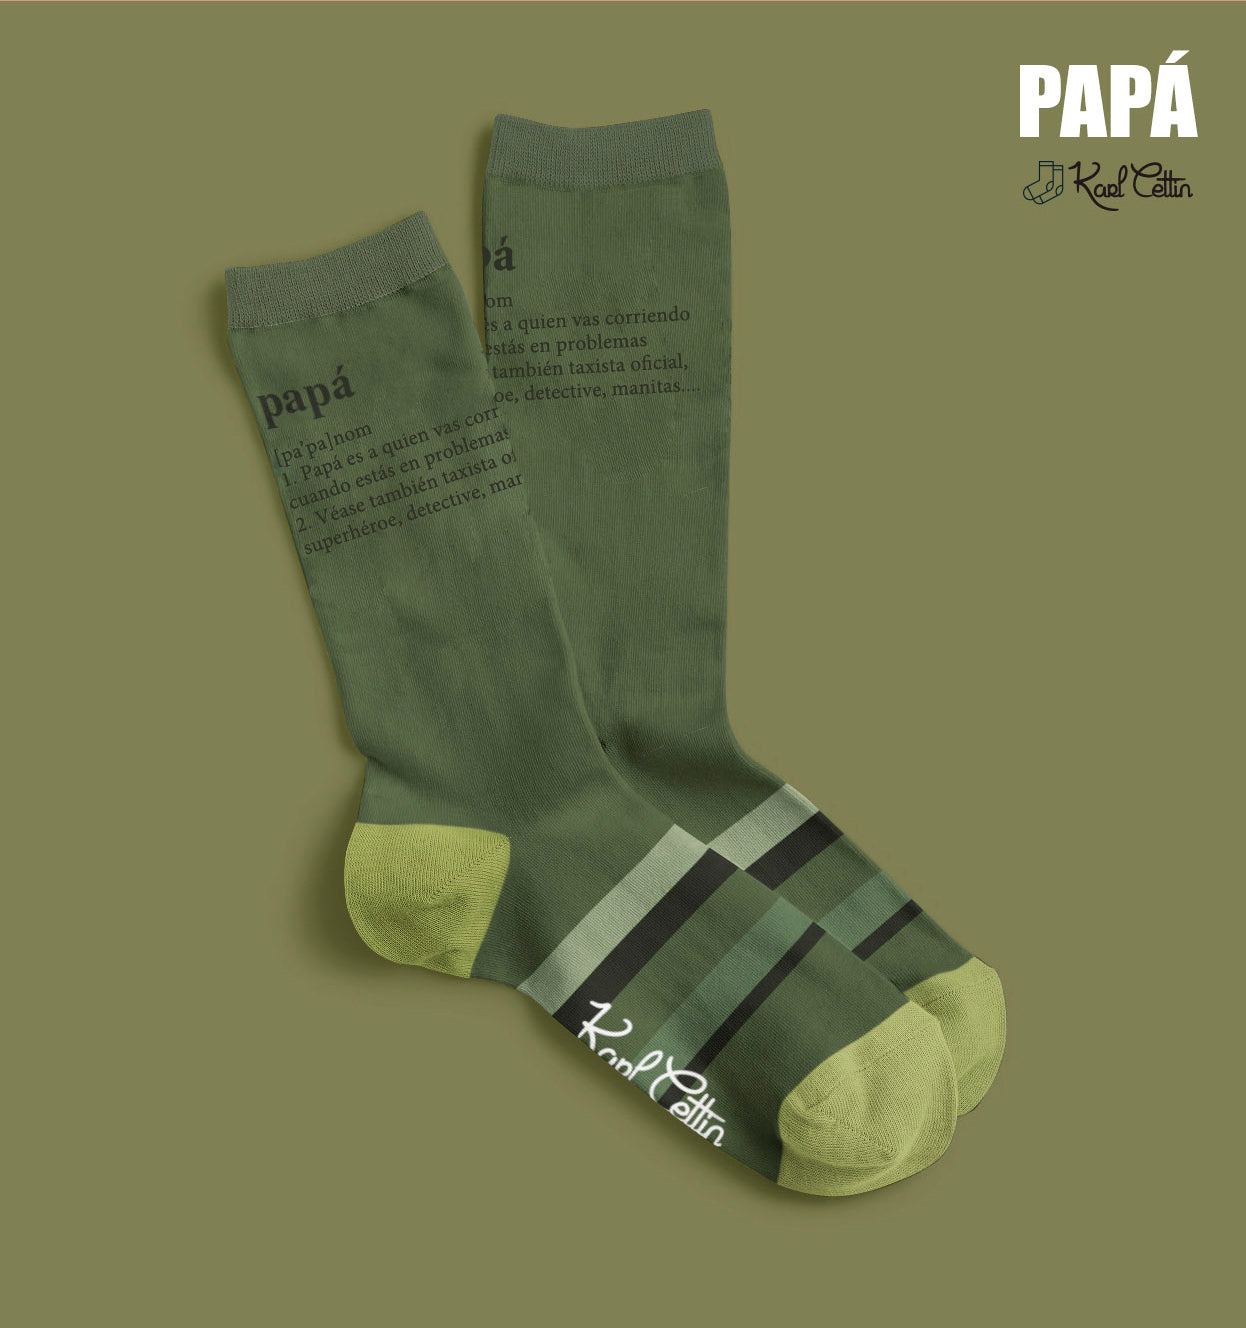 Par de calcetines chico "Papá"- Español